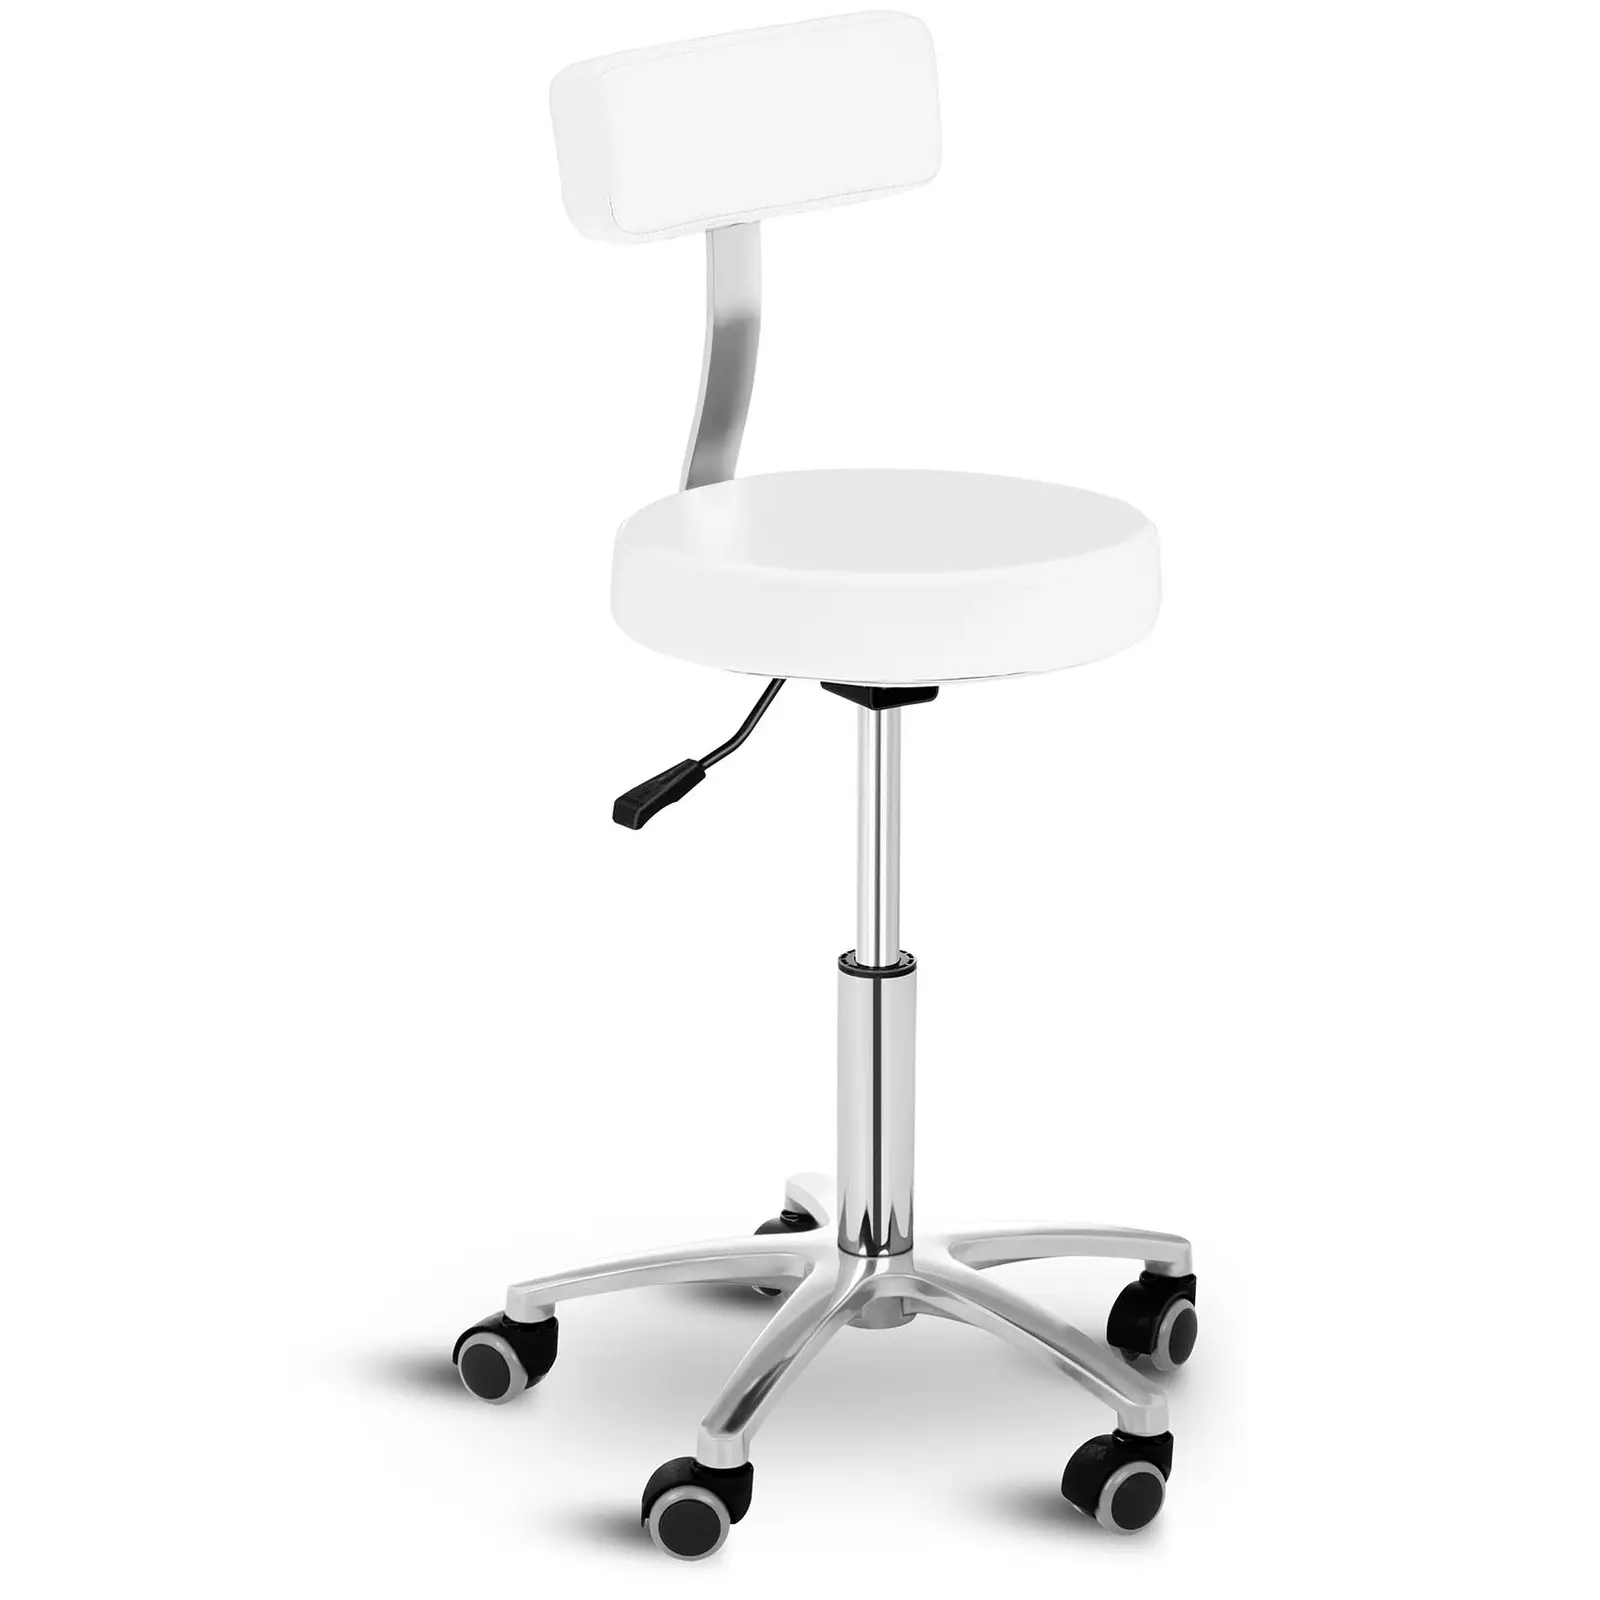 Scaun scaun cu spătar - 445-580 mm - 150 kg - White}